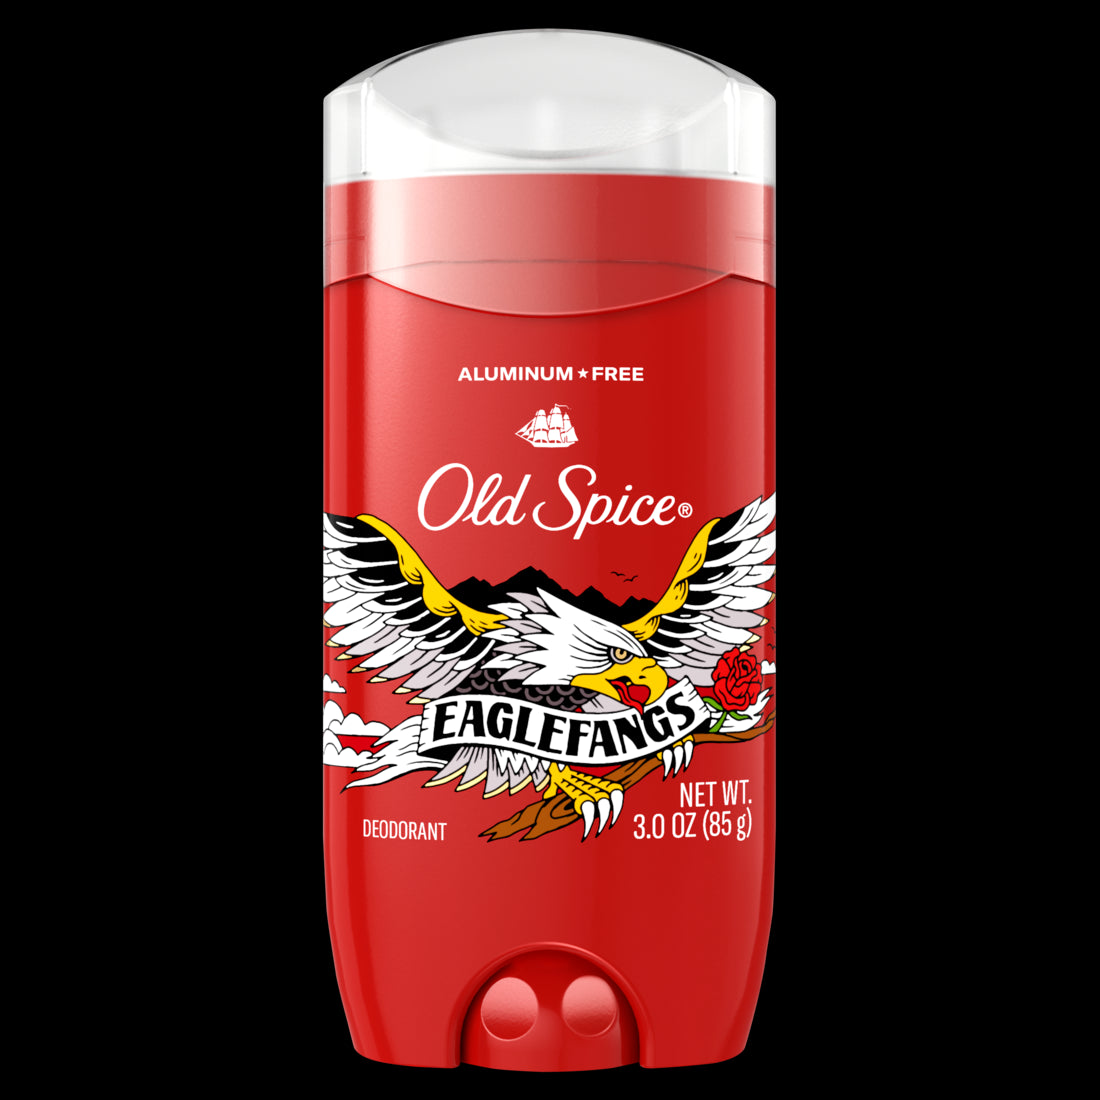 Old Spice Aluminum Free Deodorant for Men Eaglefangs - 3oz/12pk